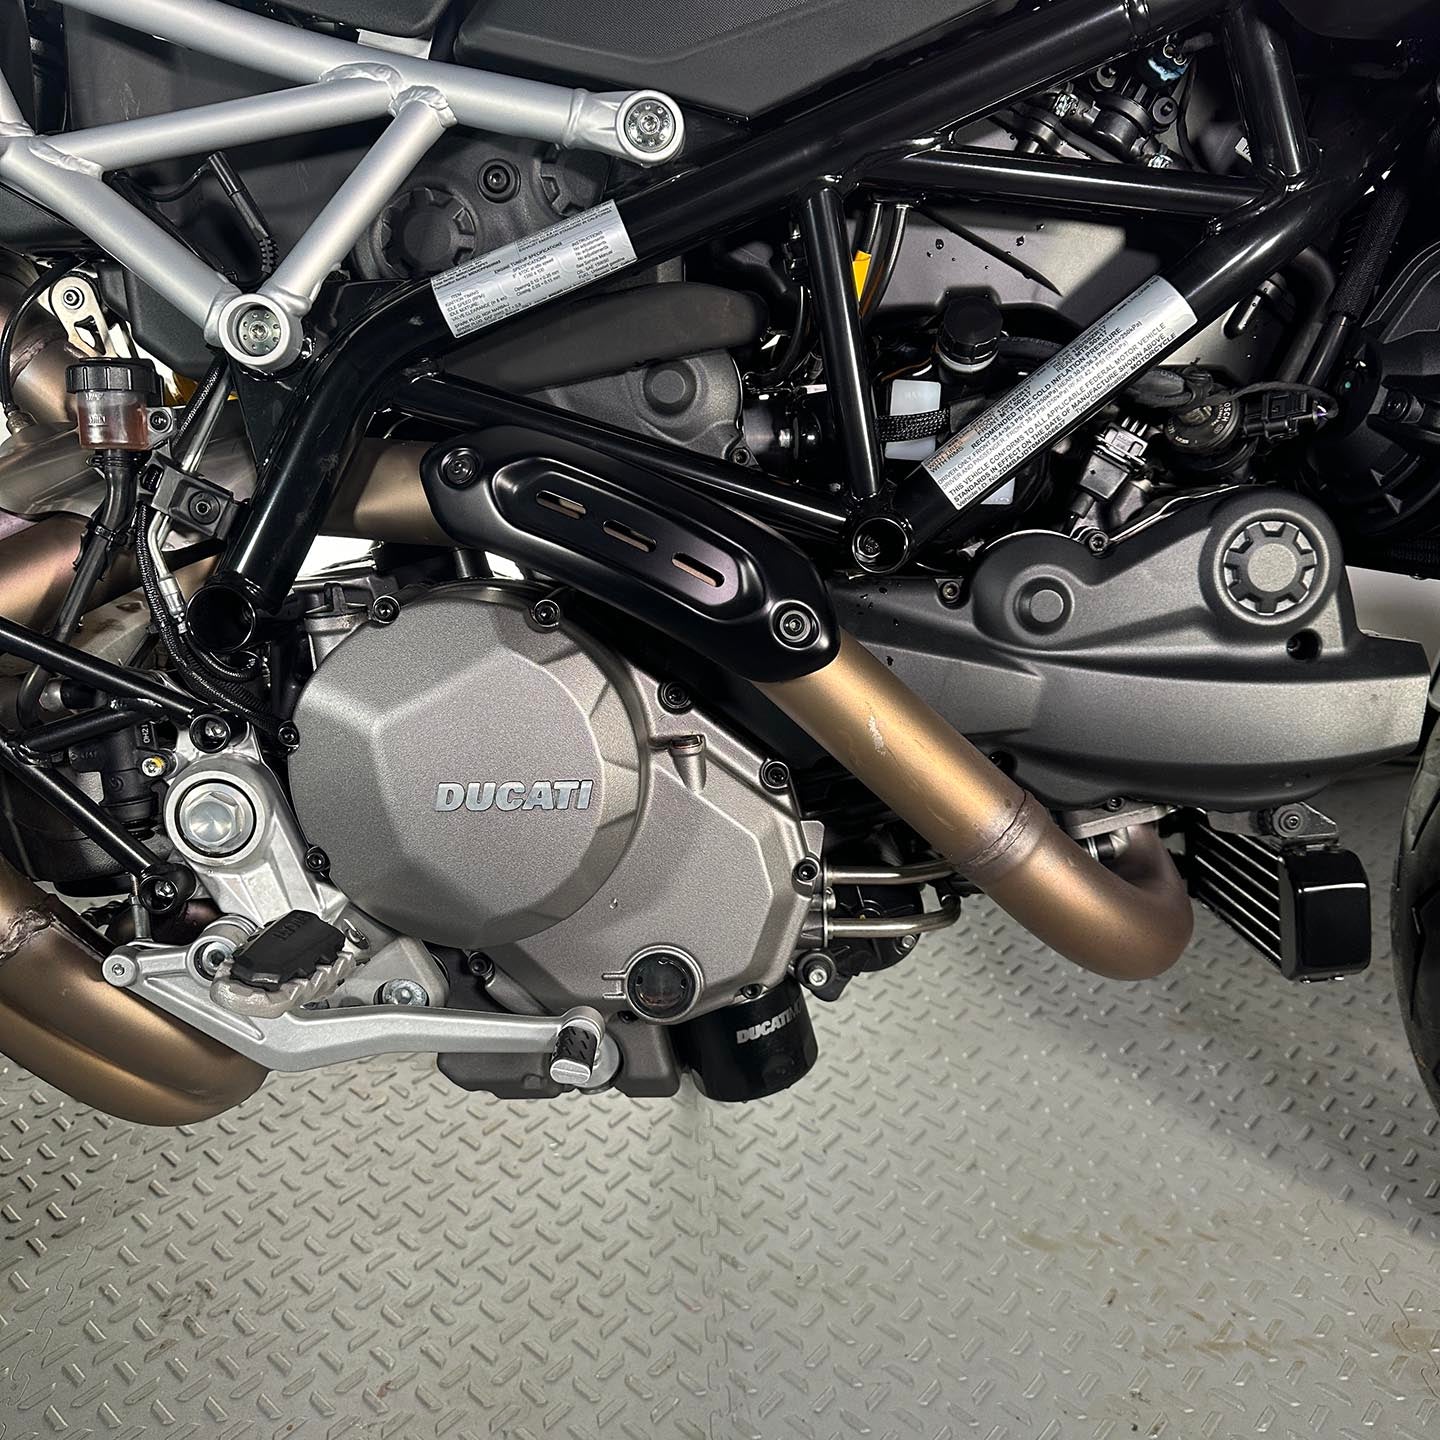 2021 Ducati Hypermotard RVE #37/100 (1,010 Miles)